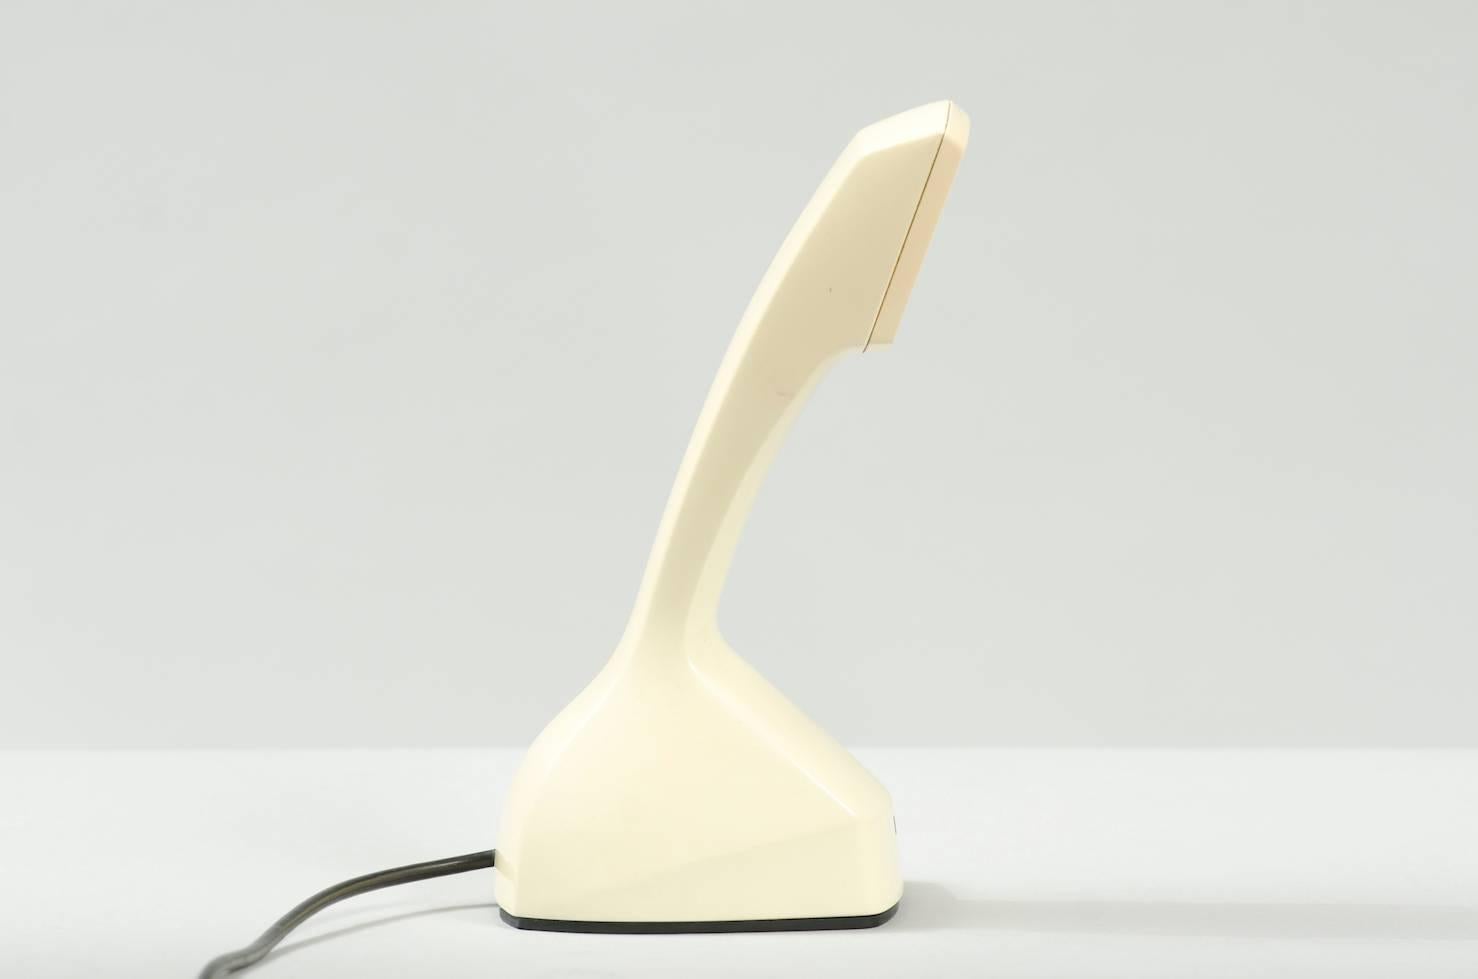 “Cobra” model ivory color phone.
Producer: Ericsson.